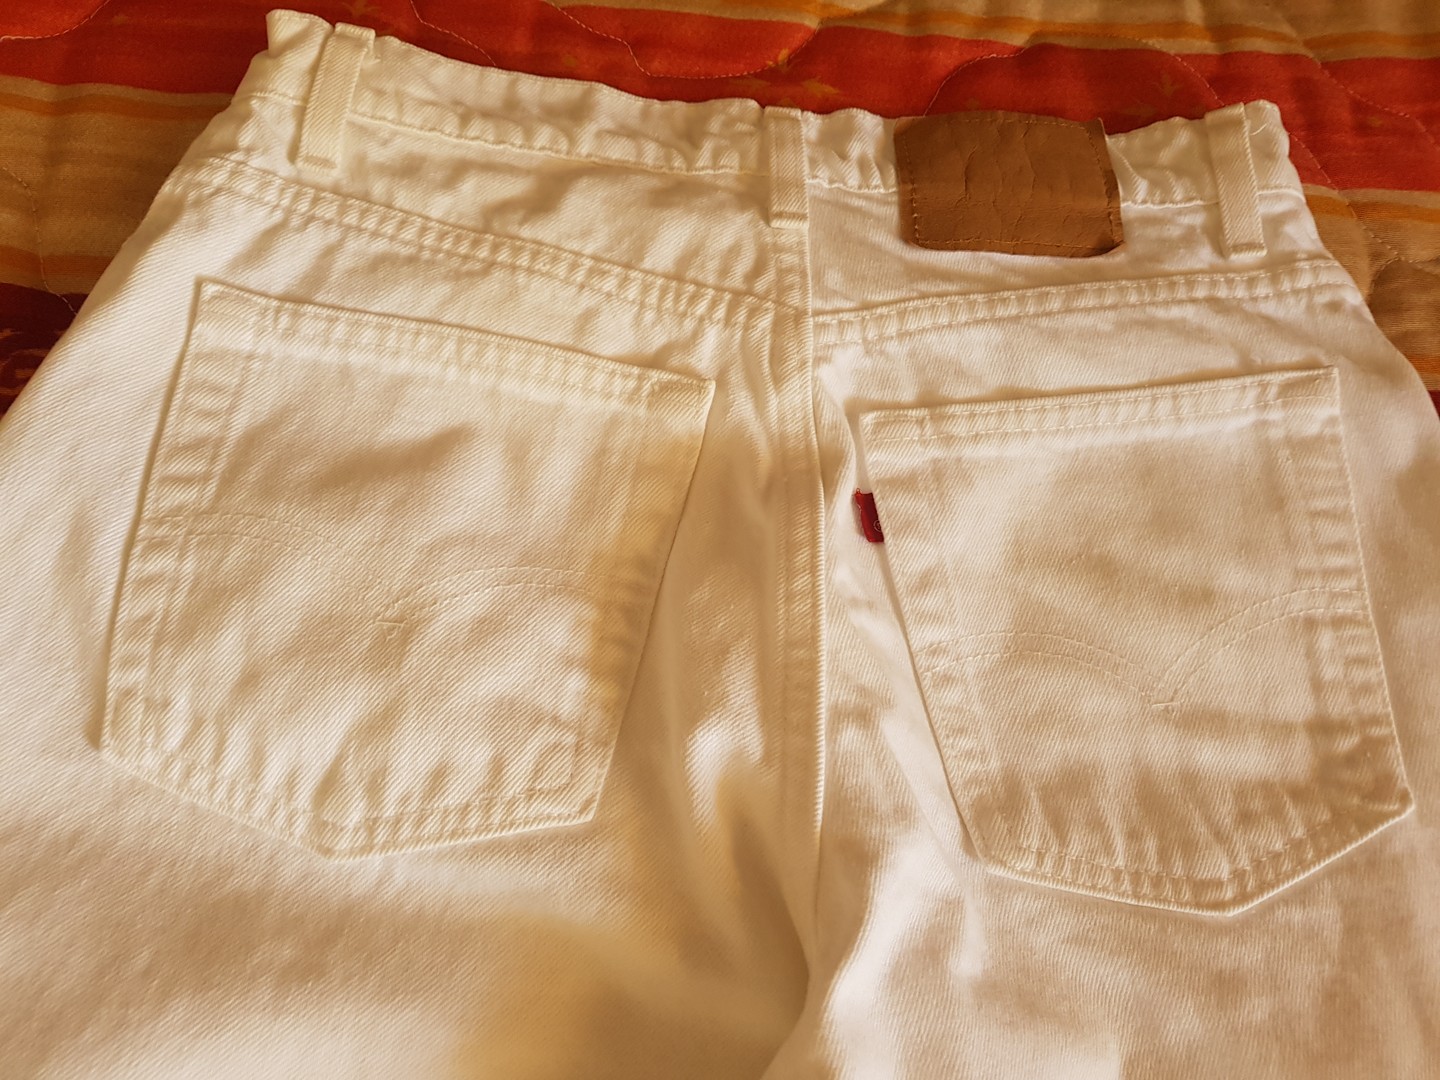 Pantalón blanco tela de jeans de algodón, marca Levi's.